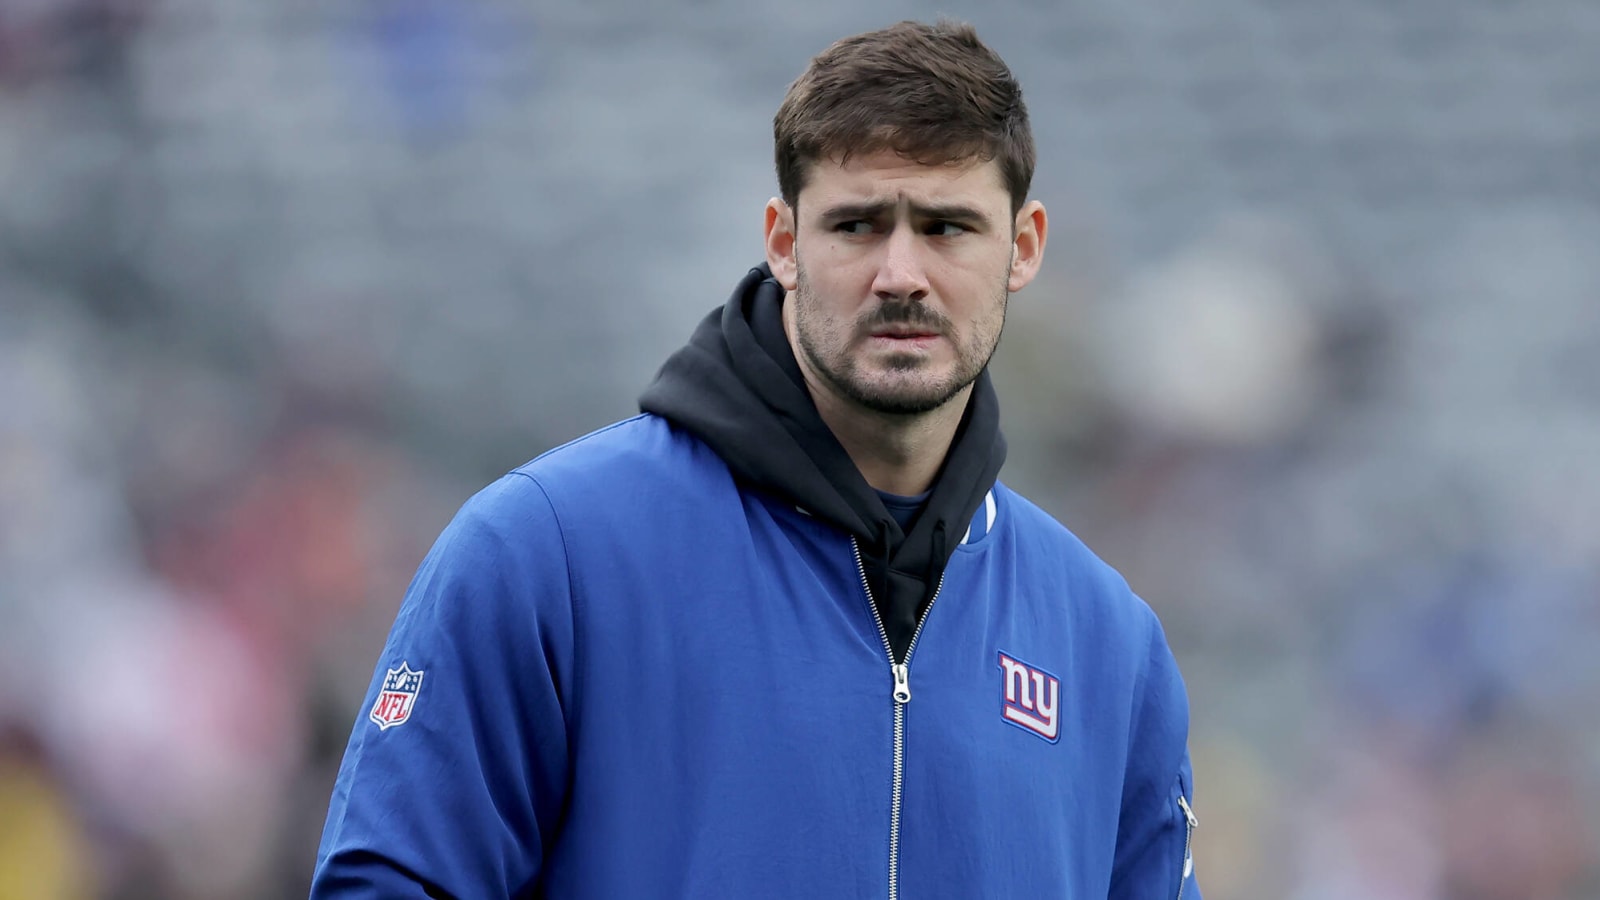 Giants’ Daniel Jones brushes off rumors of being replaced